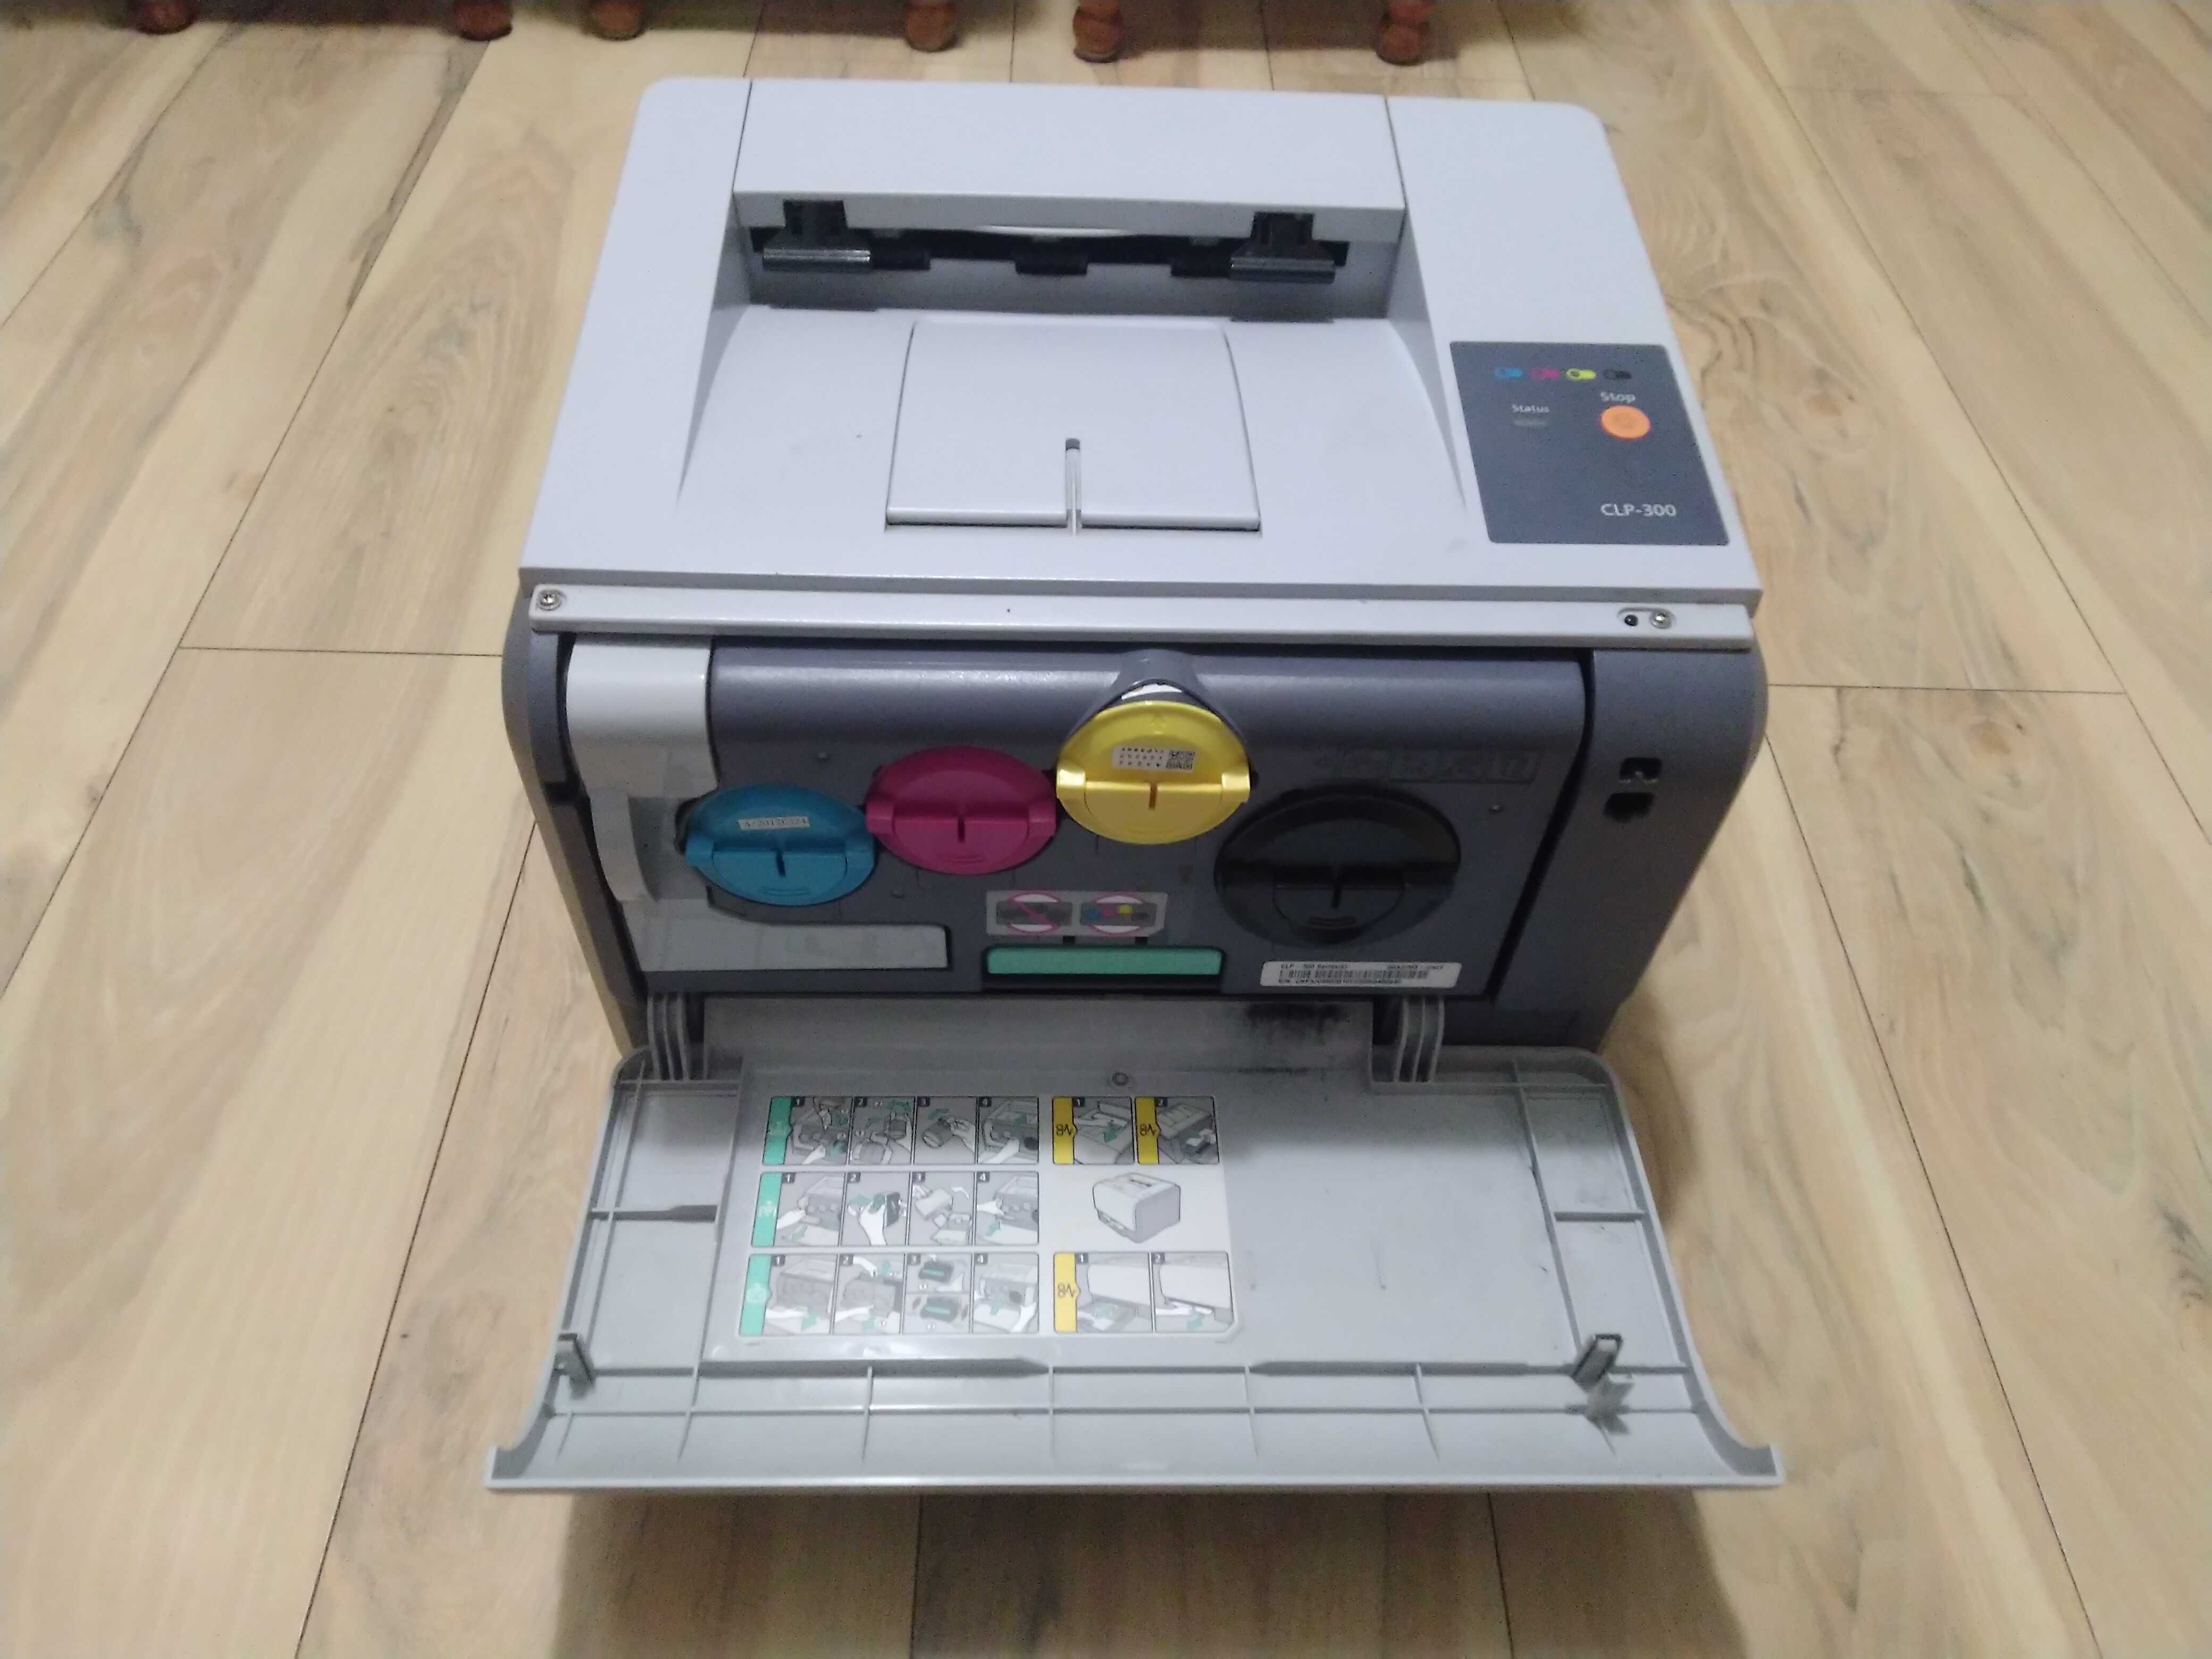 drukarka Samsung CLP-300 laserowa, kolorowa, okazja